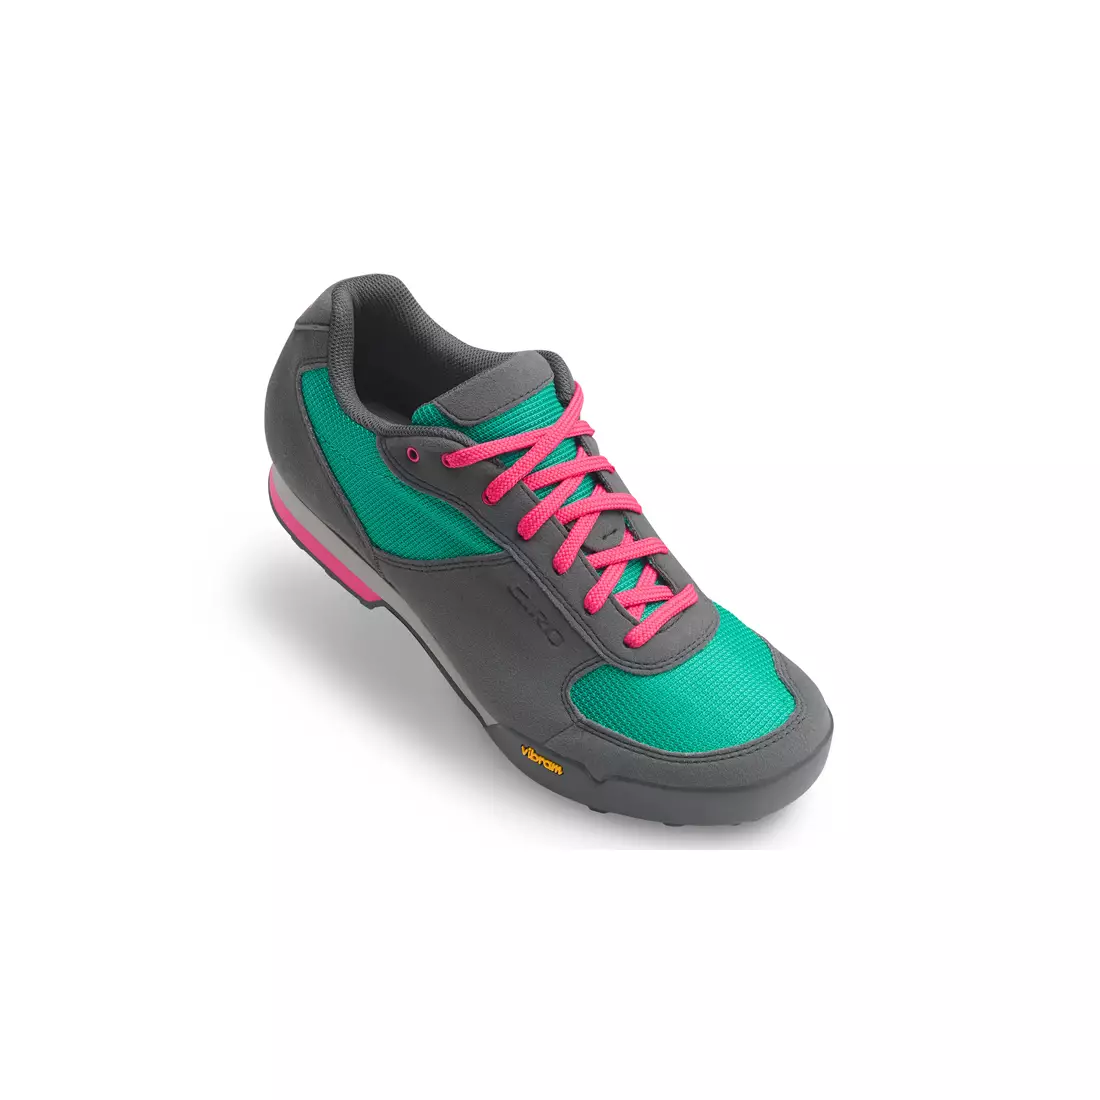 GIRO PETRA VR - dámska cyklistická obuv grey-turquoise-pink